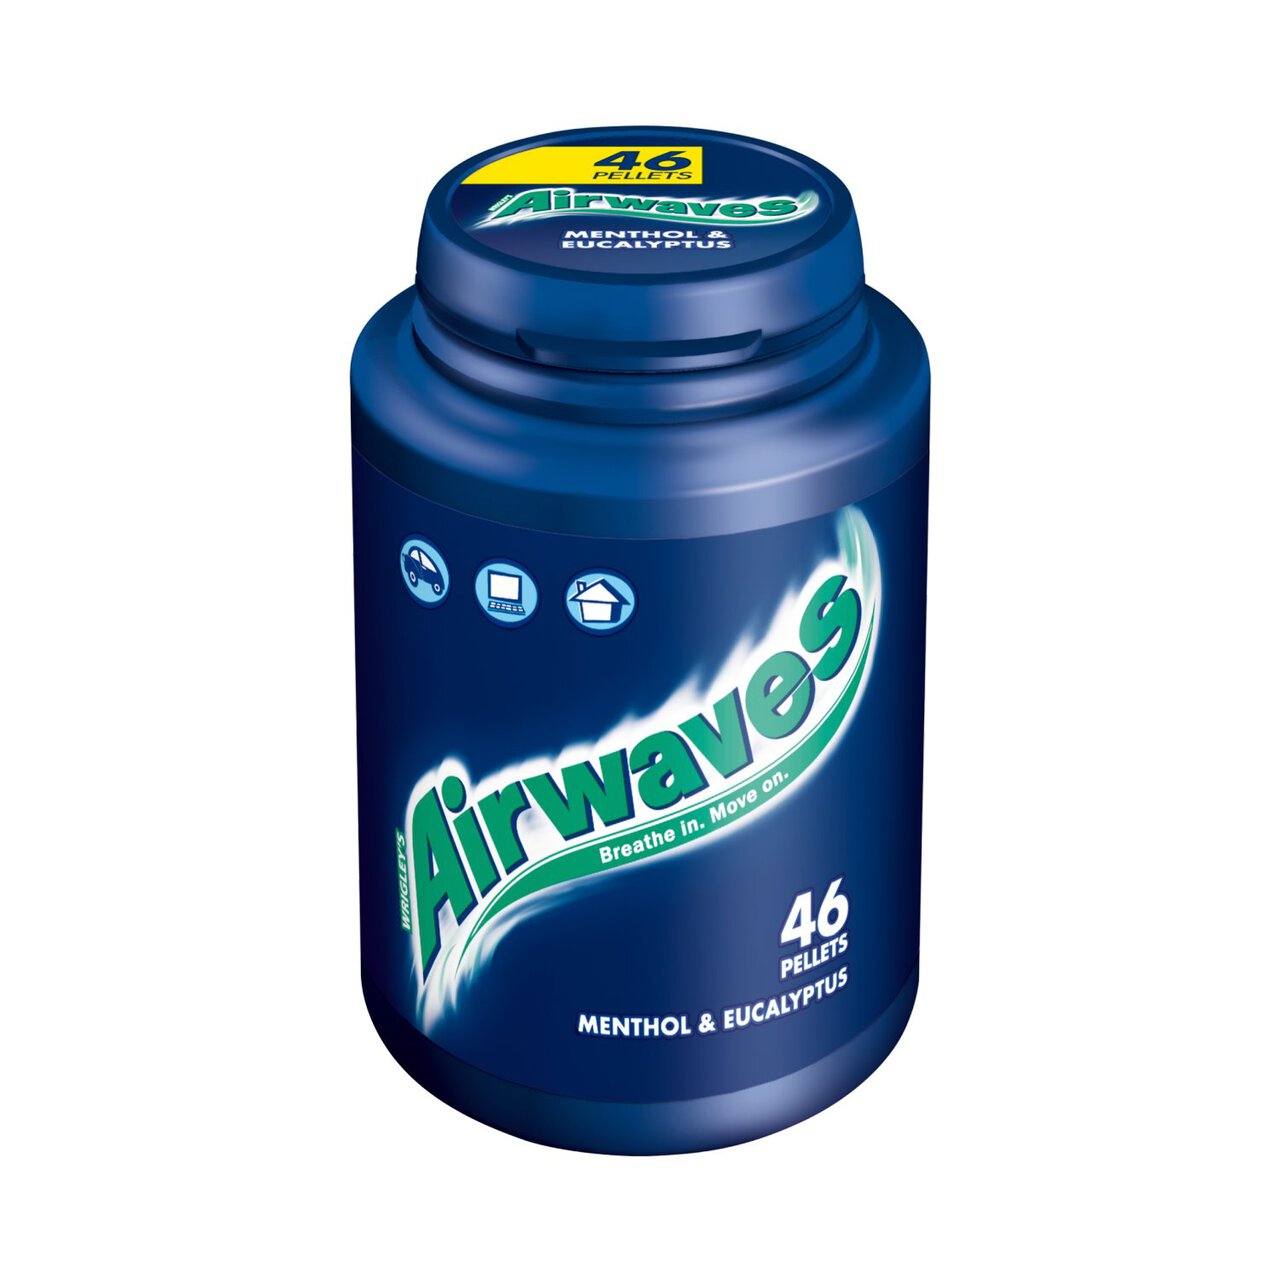 Airwaves Menthol & Eucalyptus Sugar Free Chewing Gum Bottle 46 Pieces 46 per pack